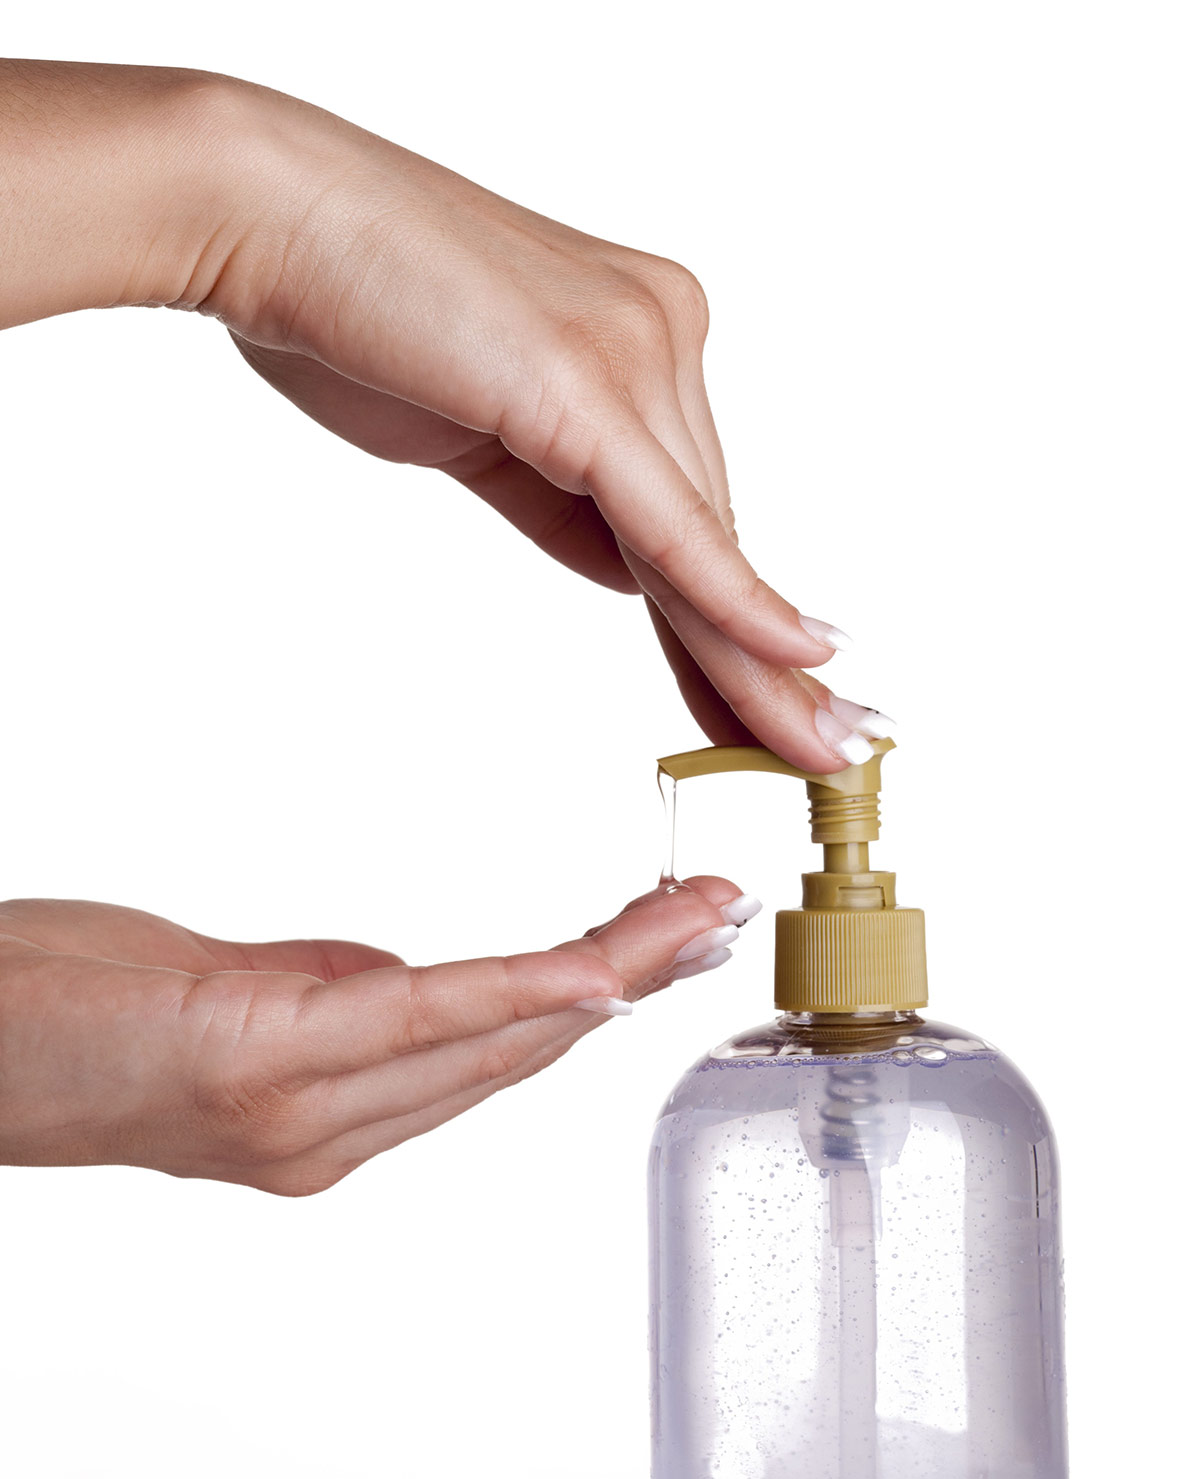 hands pumping lotion from a pump dispenser bottle